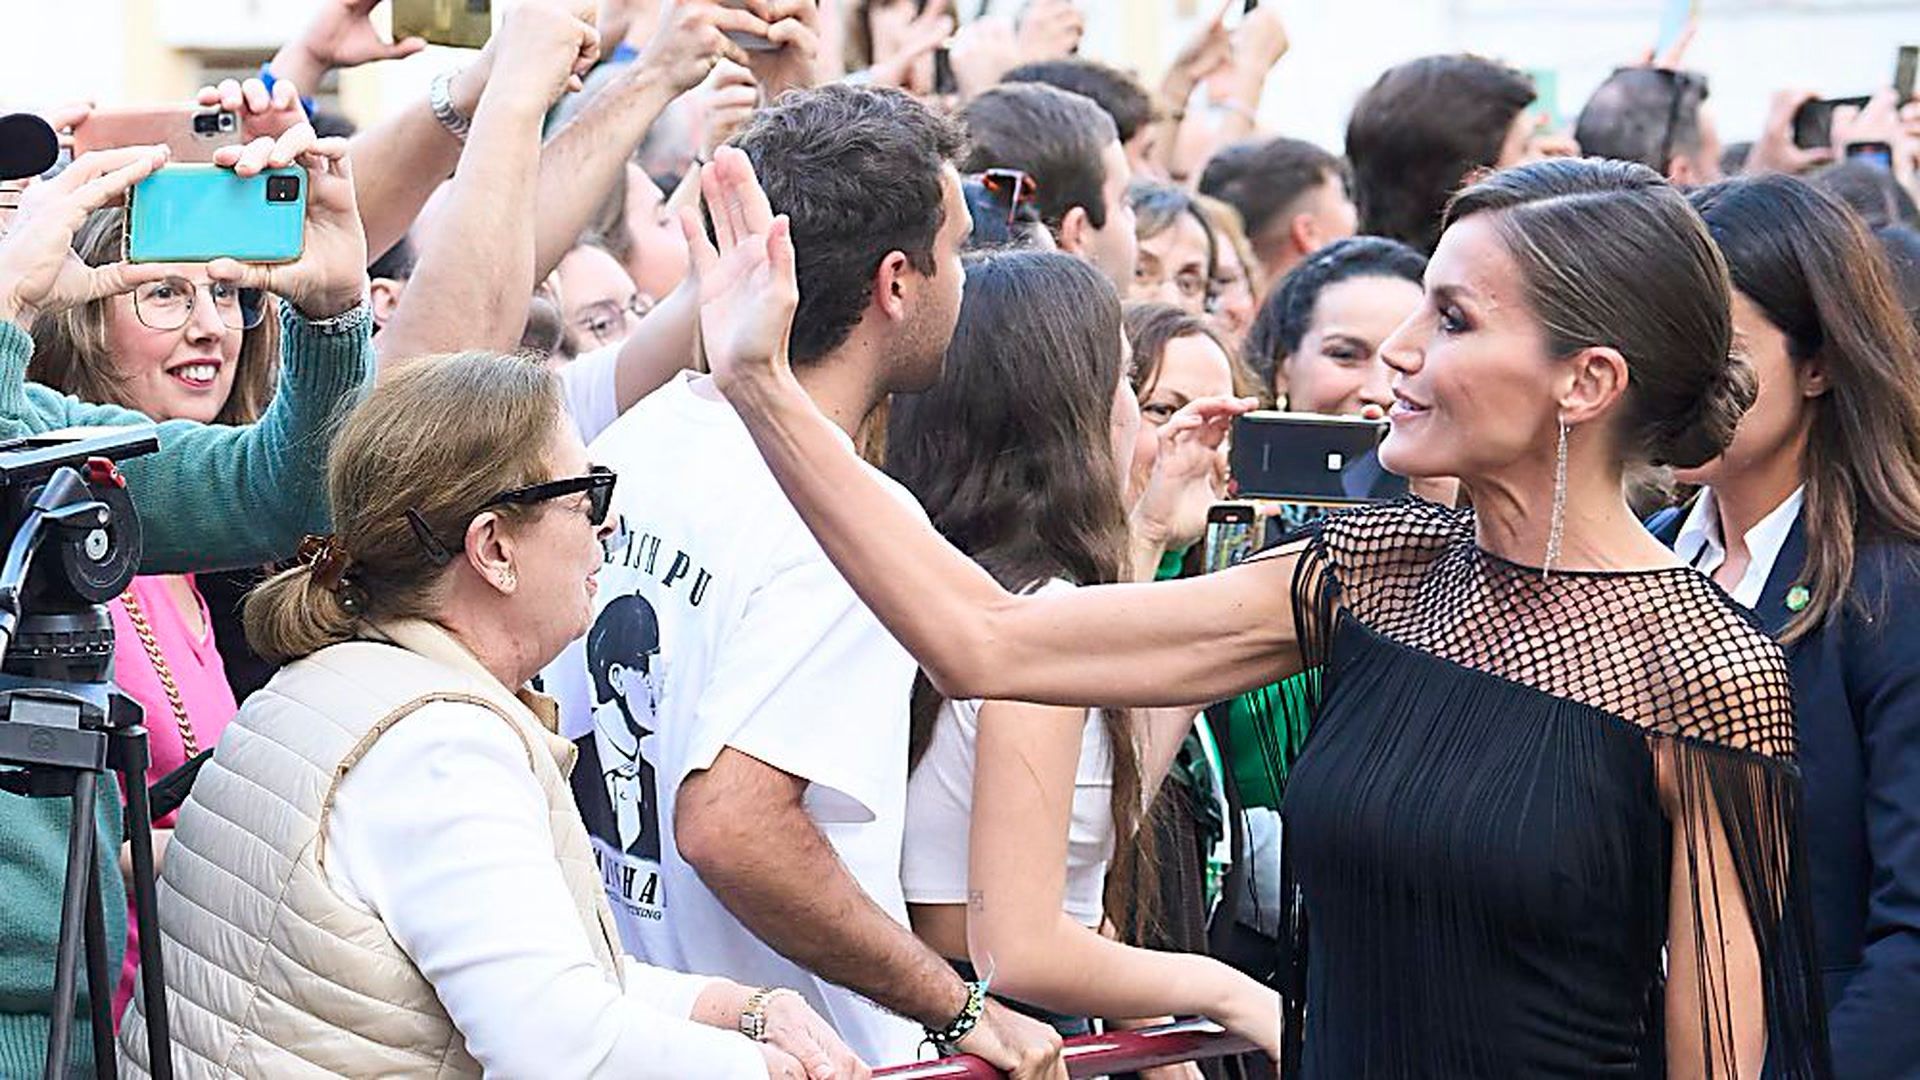 Muscle queen is back: Queen Letizia drives fans crazy in a net dress